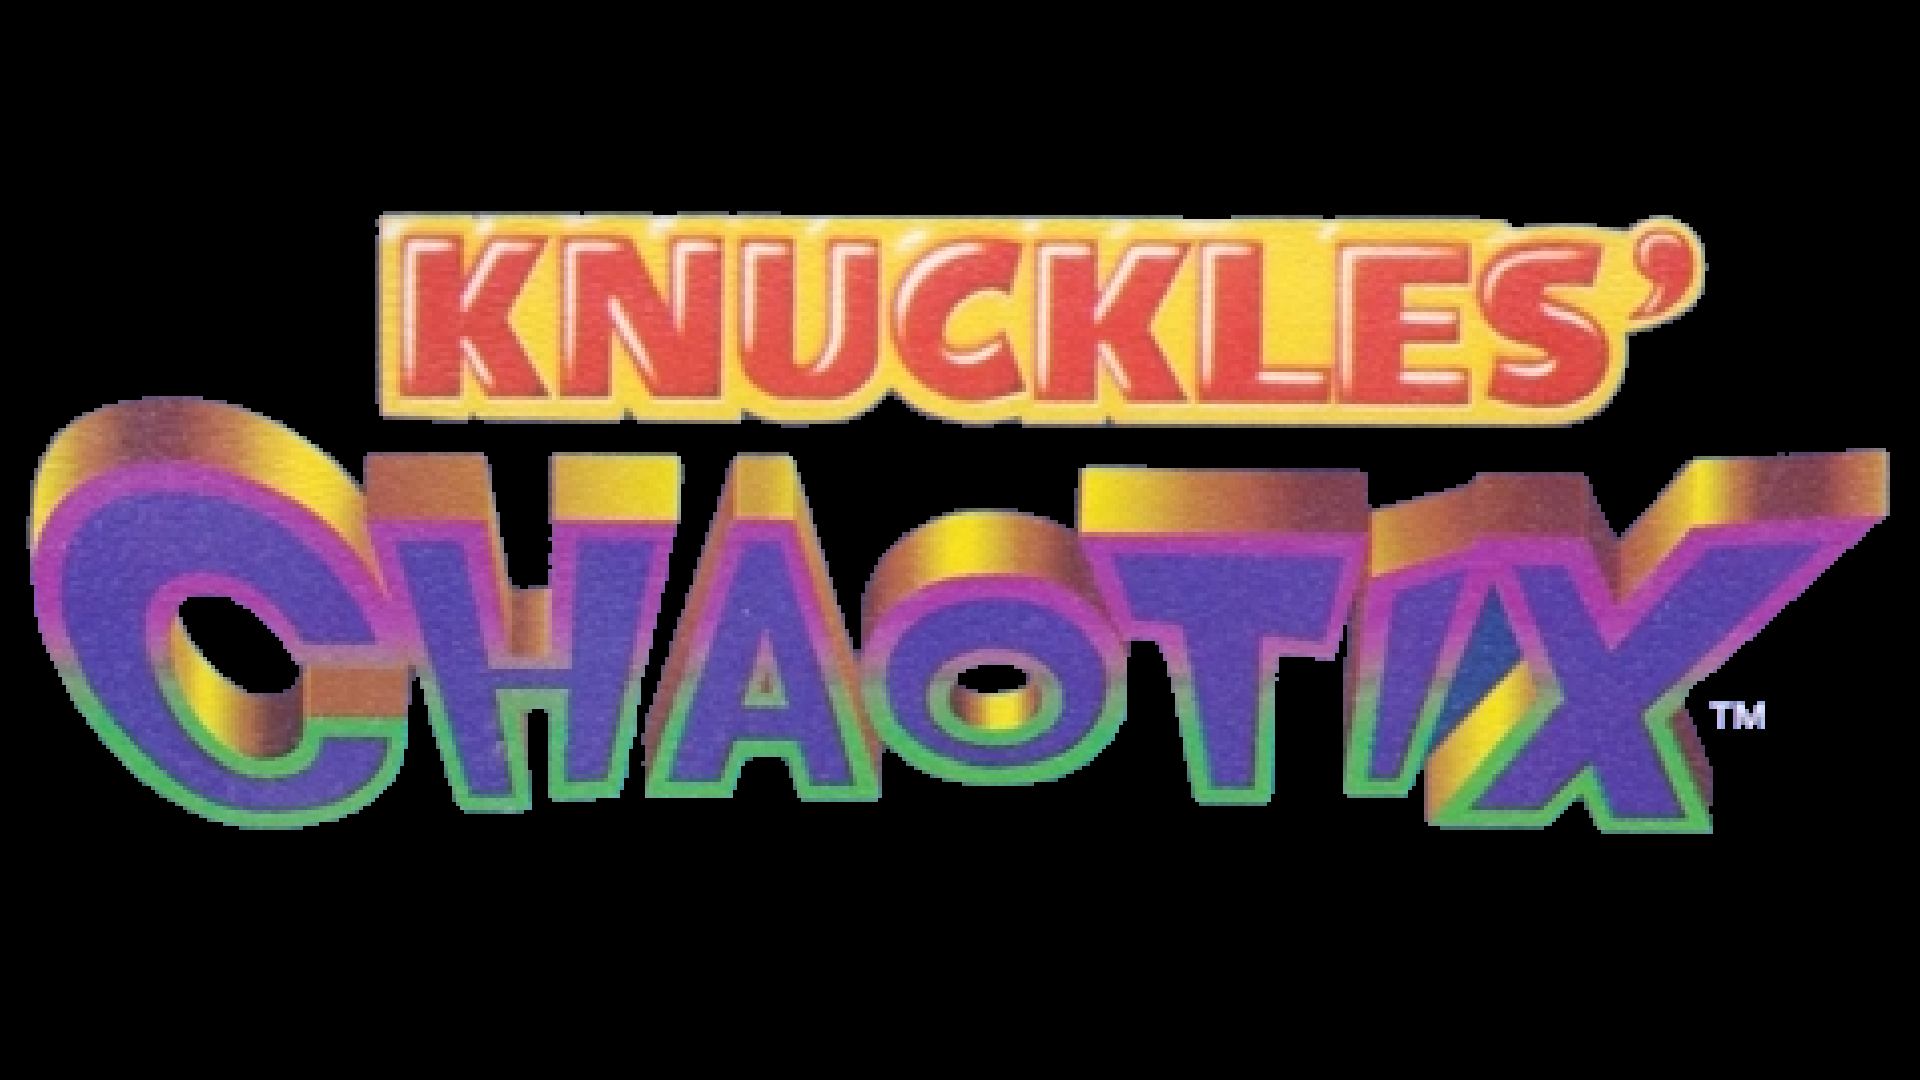 Knuckles' Chaotix Logo